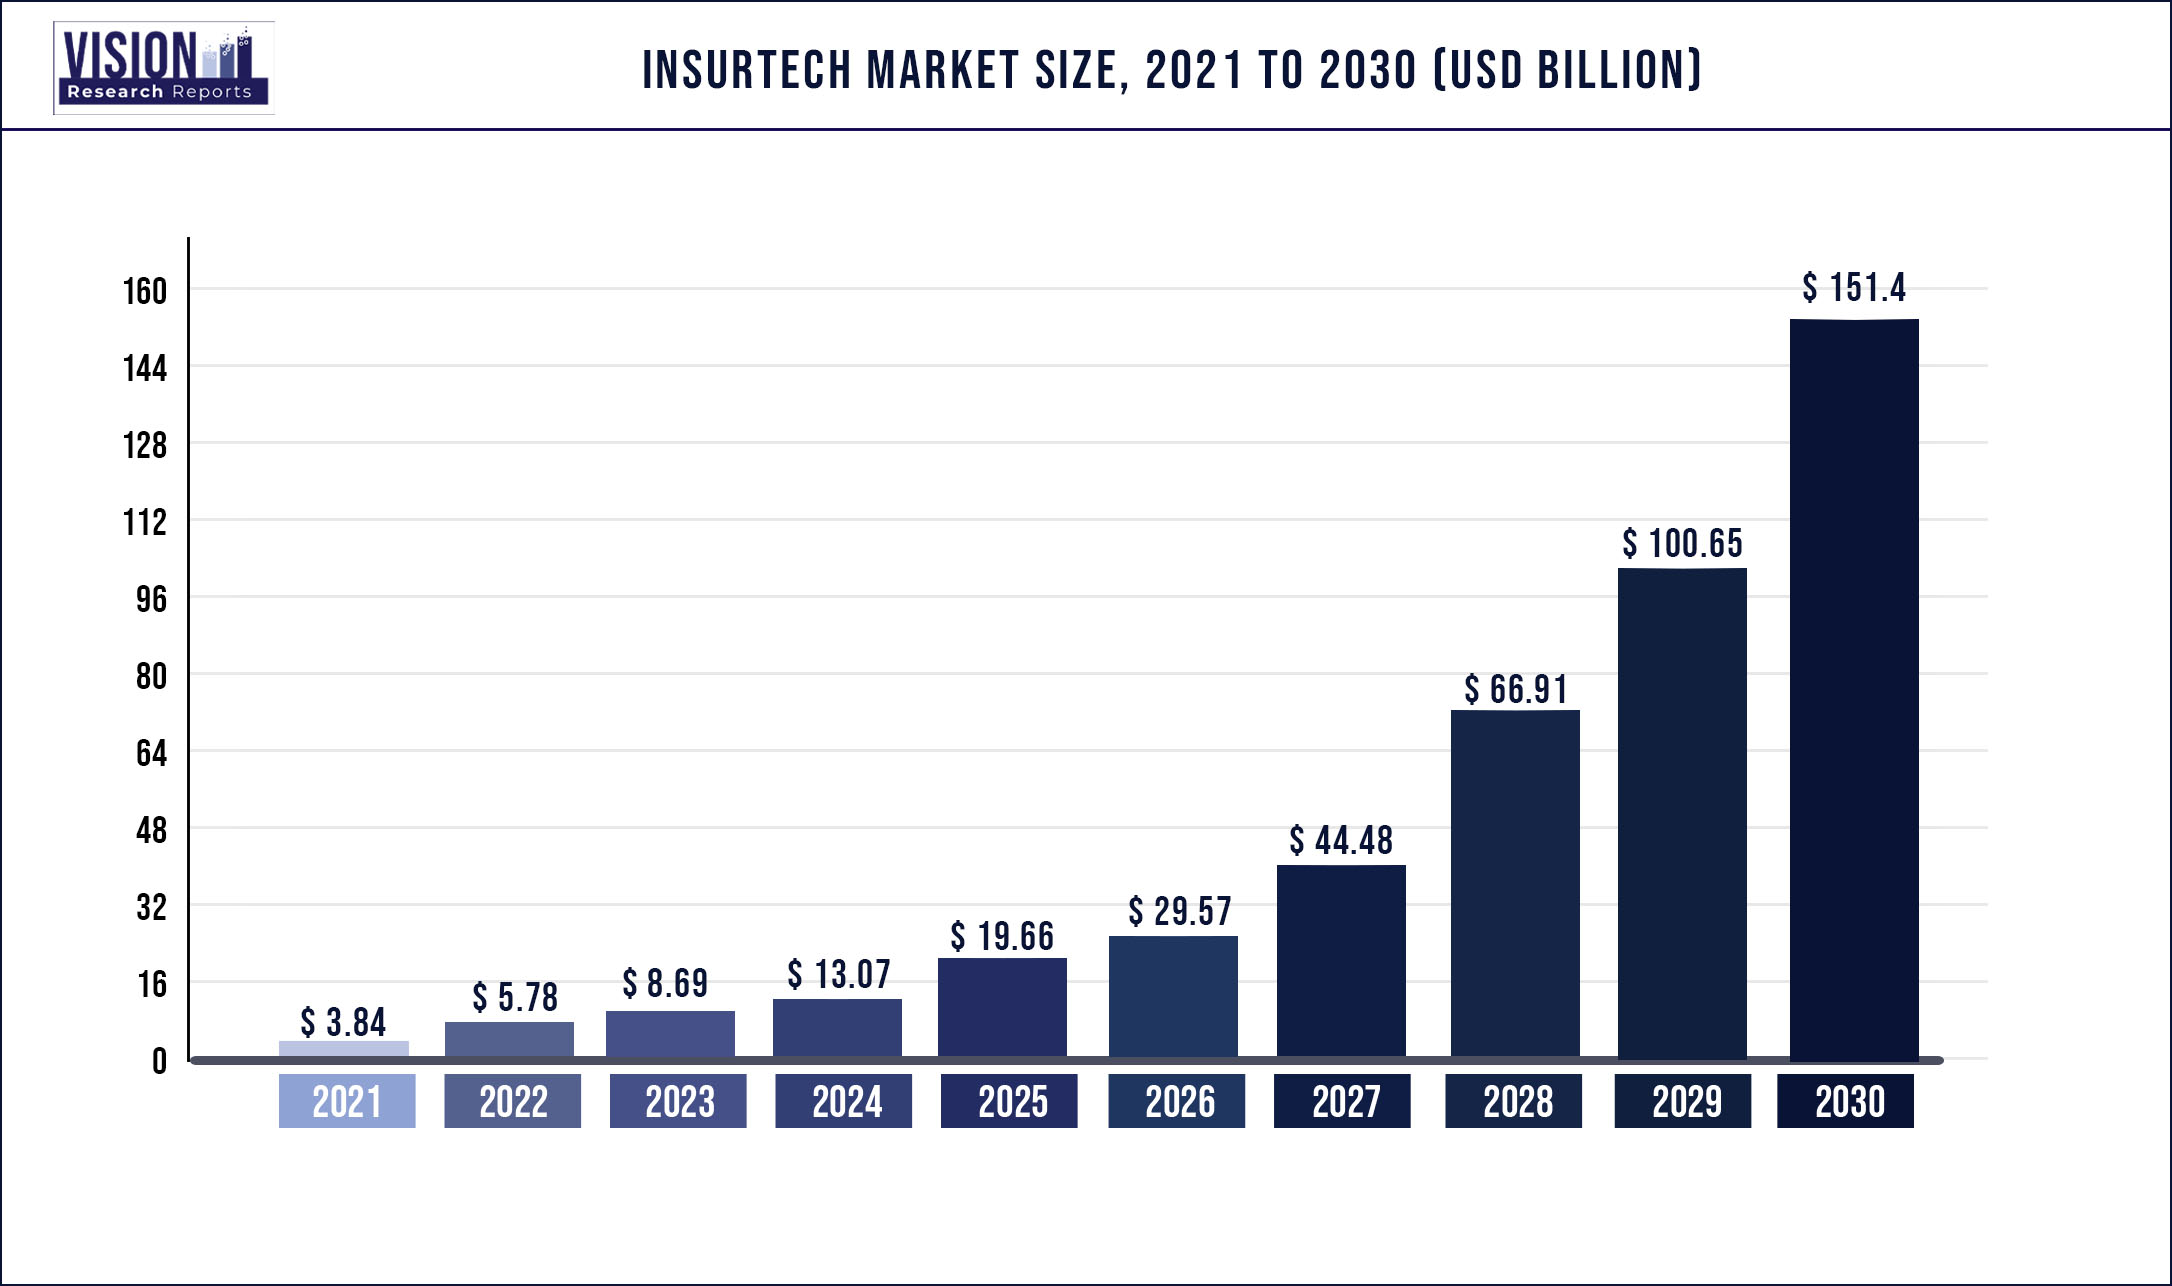 Insurtech Market Size 2021 to 2030